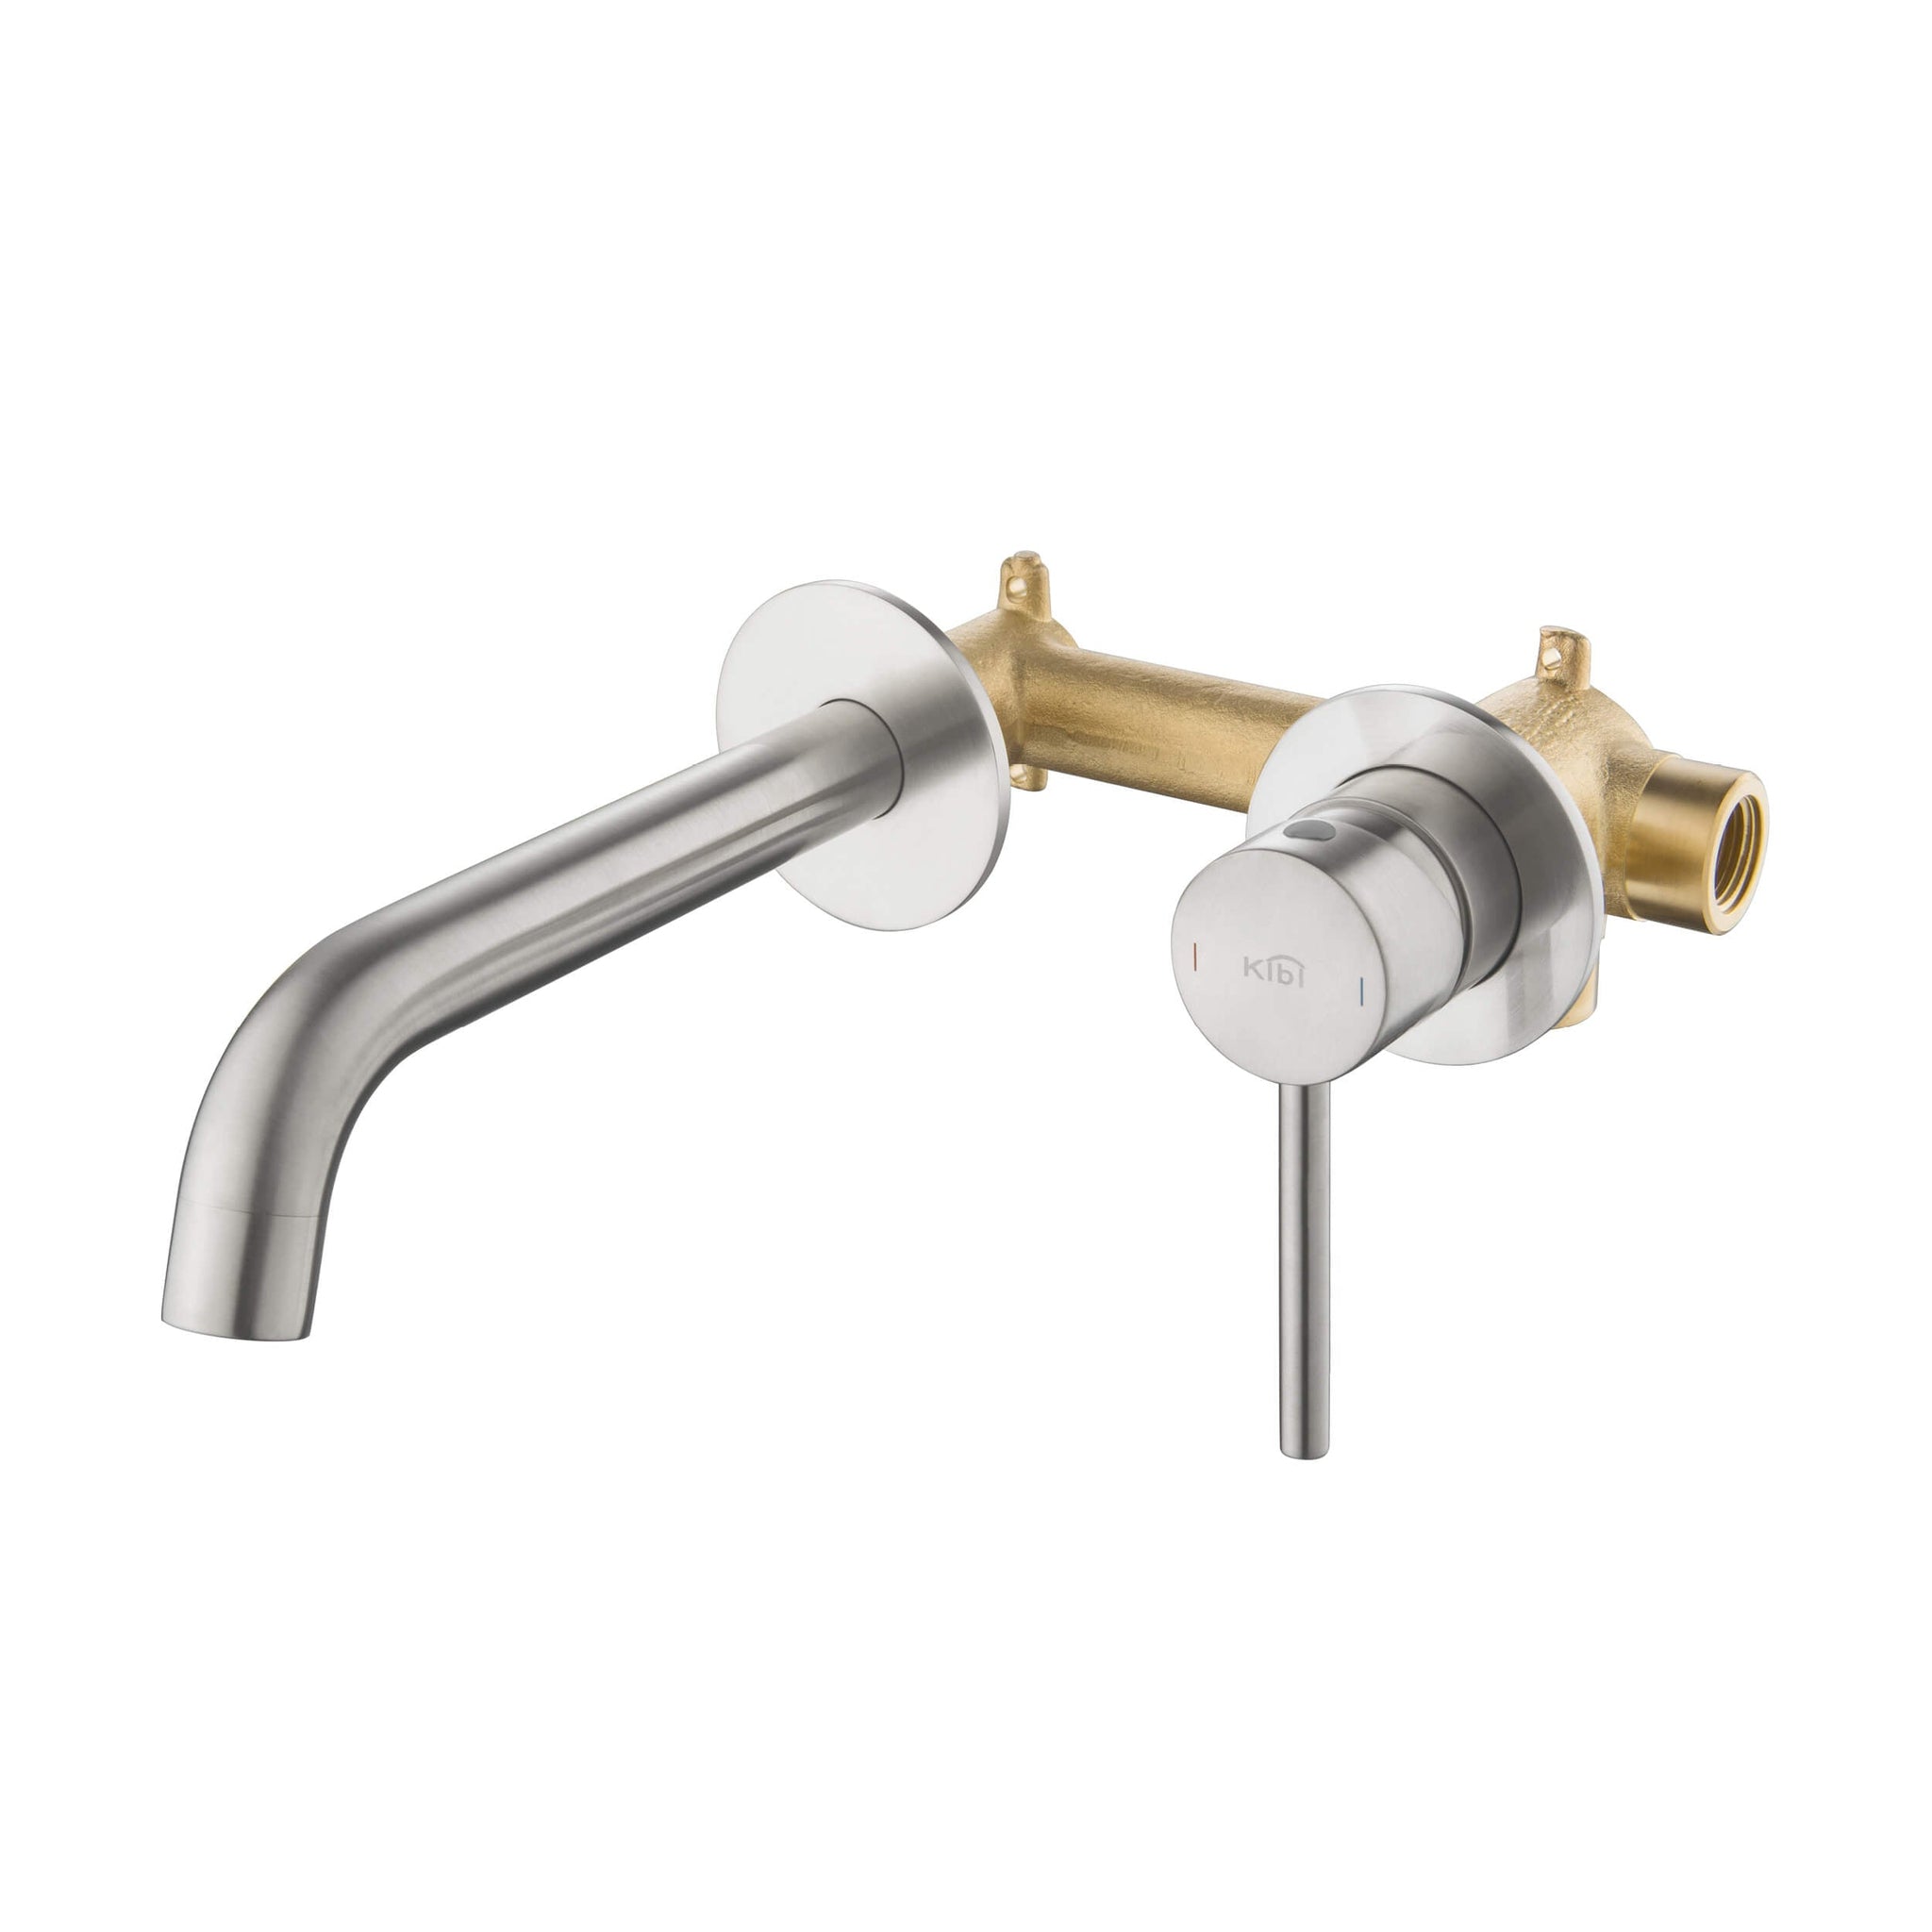 KIBI, KIBI Circular Wall Mounted Single Handle Brushed Nickel Solid Brass Bathroom Sink Faucet